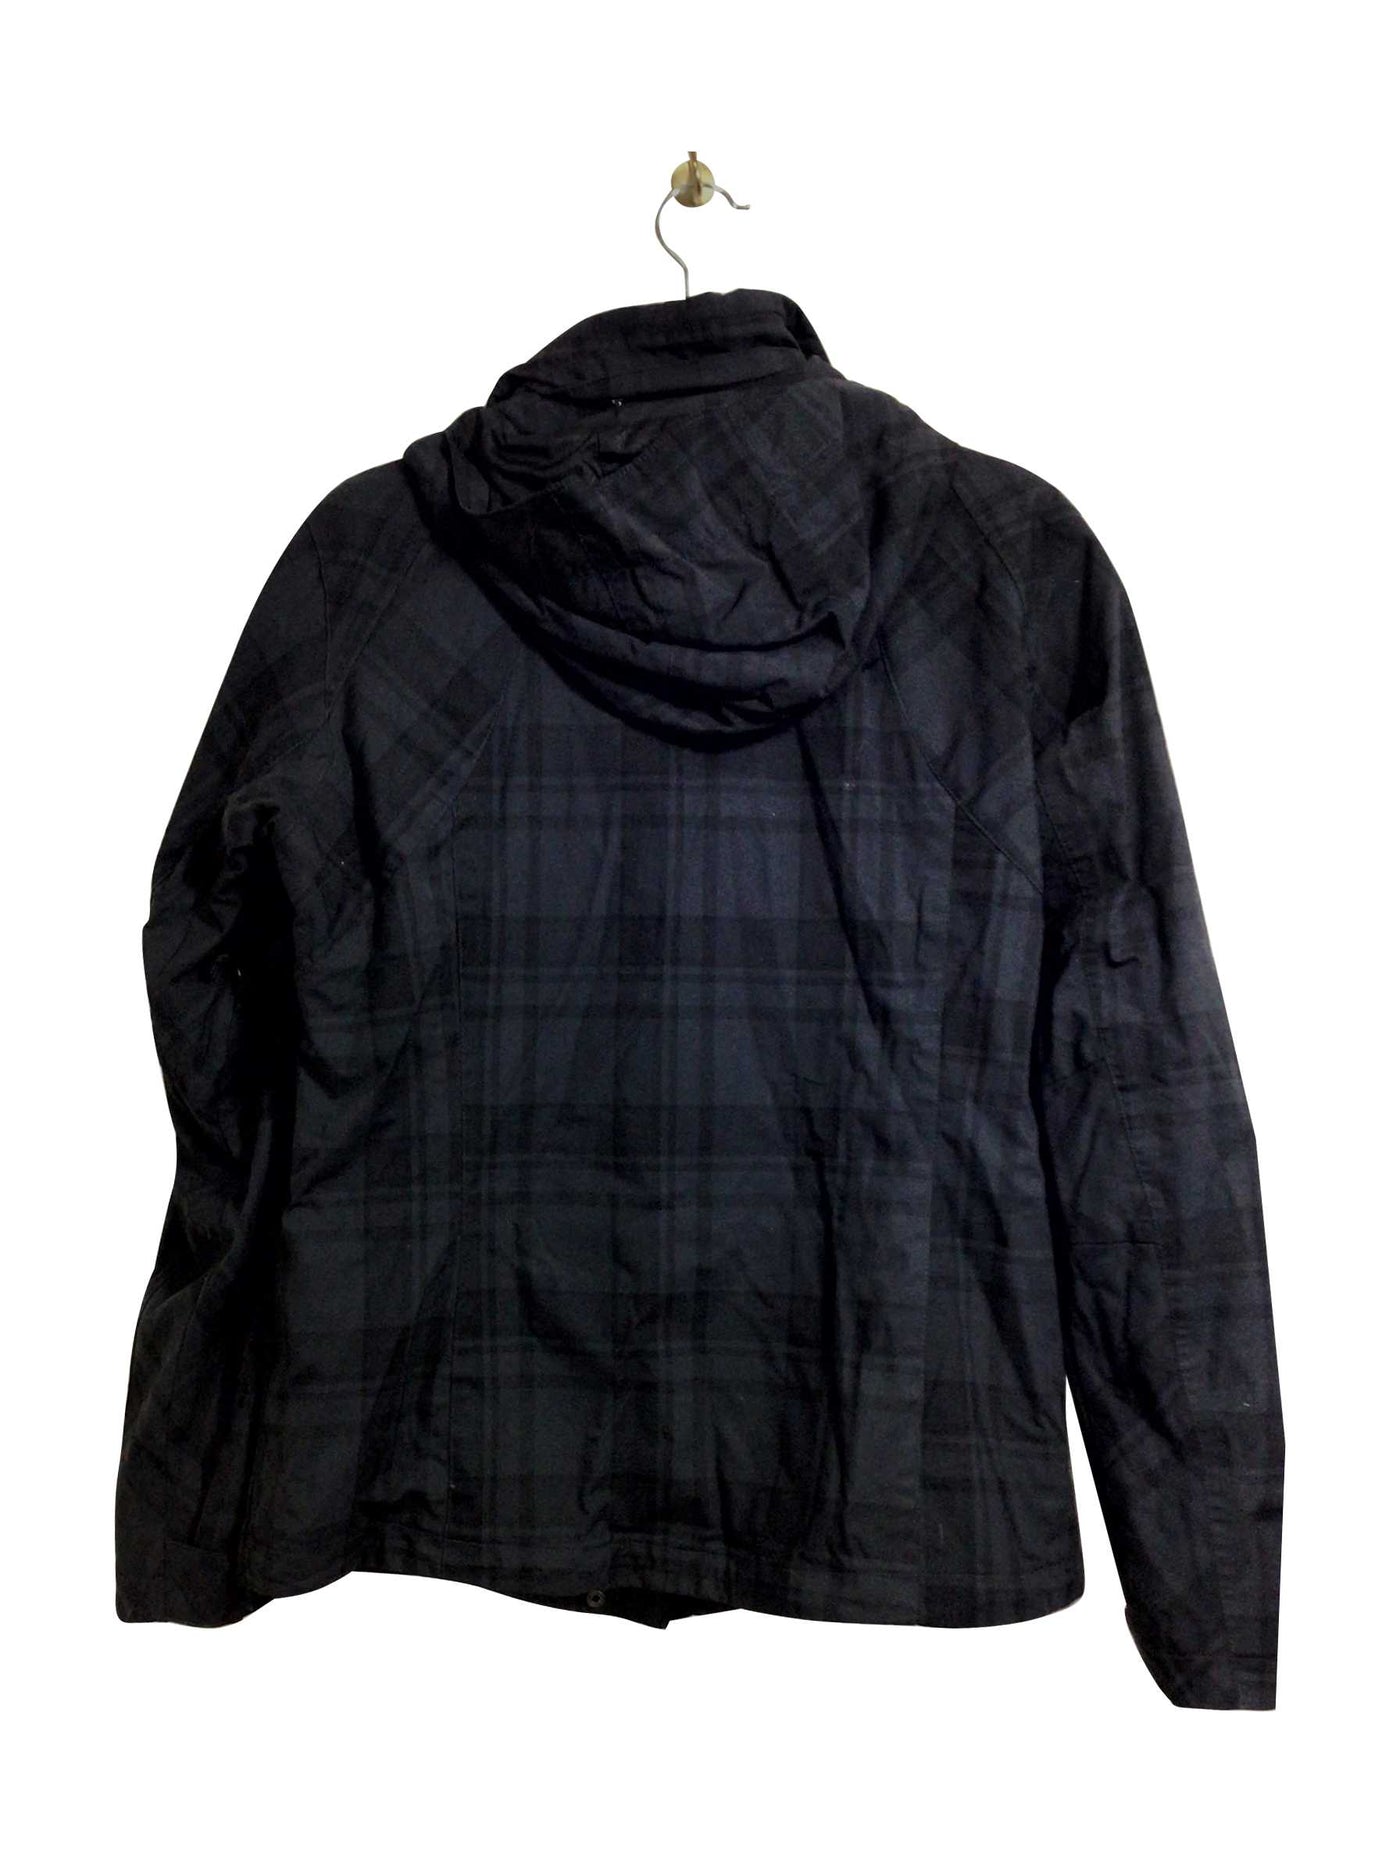 COLUMBIA Regular fit Coat in Black - Size M | 45.99 $ KOOP